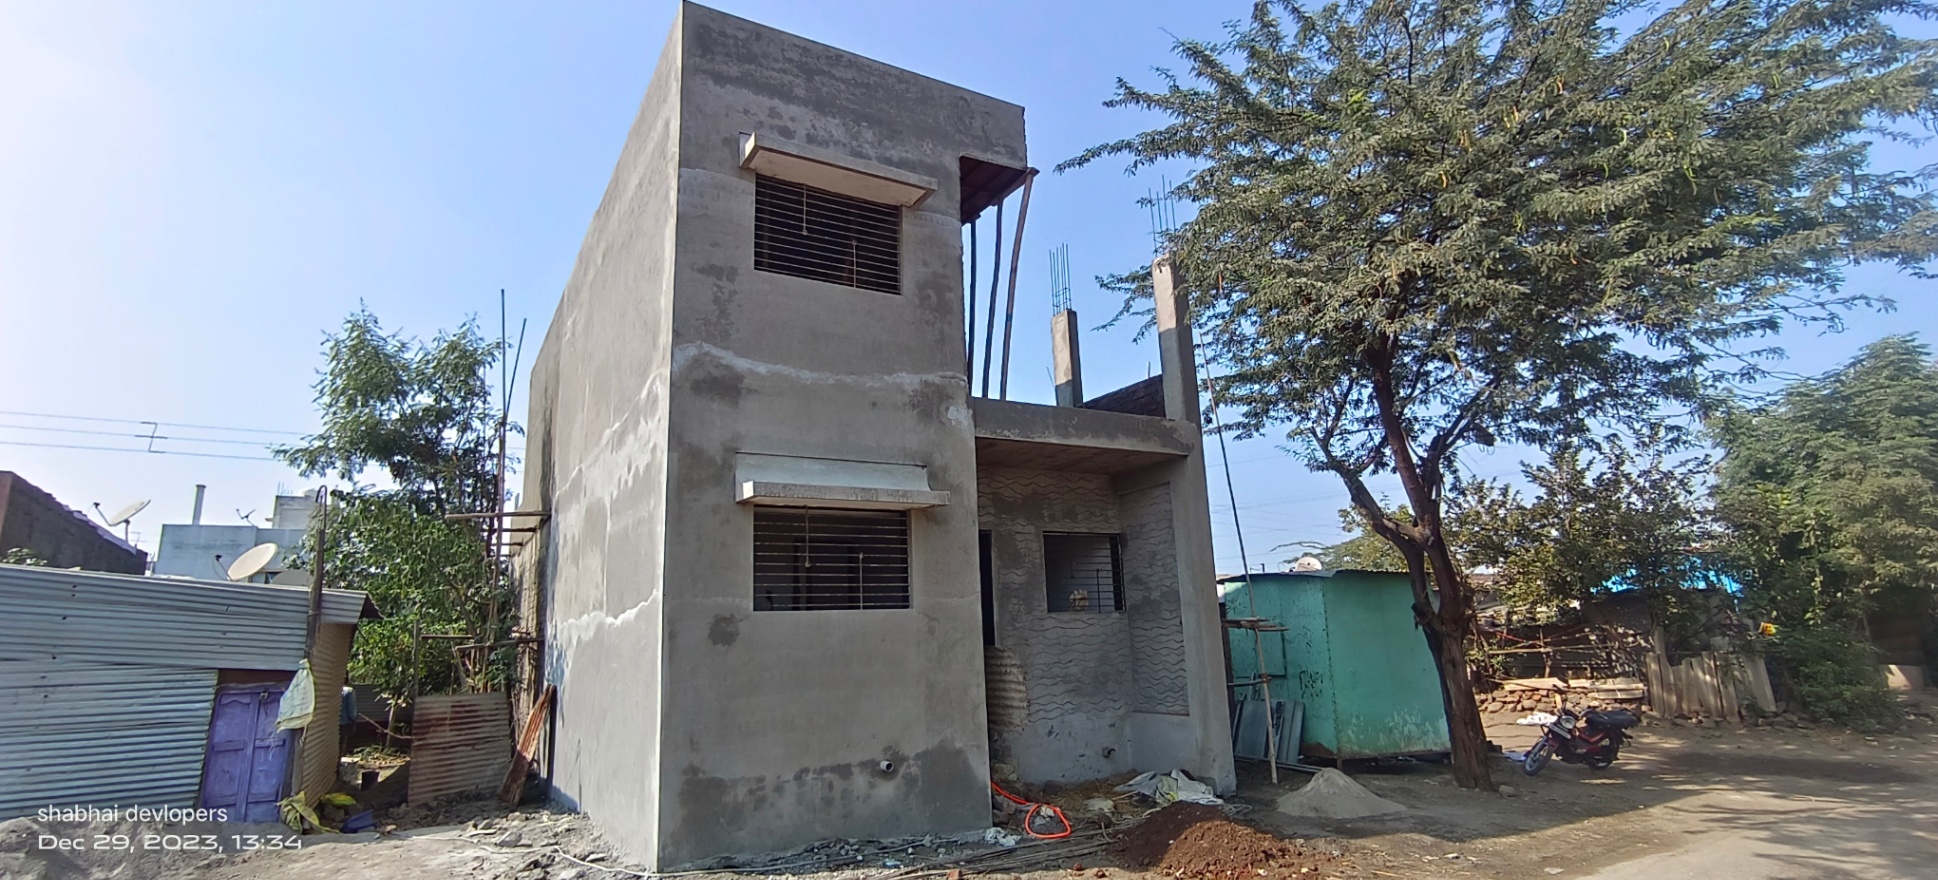 3 Bed/ 2 Bath Sell House/ Bungalow/ Villa; 850 sq. ft. carpet area; 500 sq. ft. lot; New Construction for sale @Nitin nagar akkalkot road solapur 